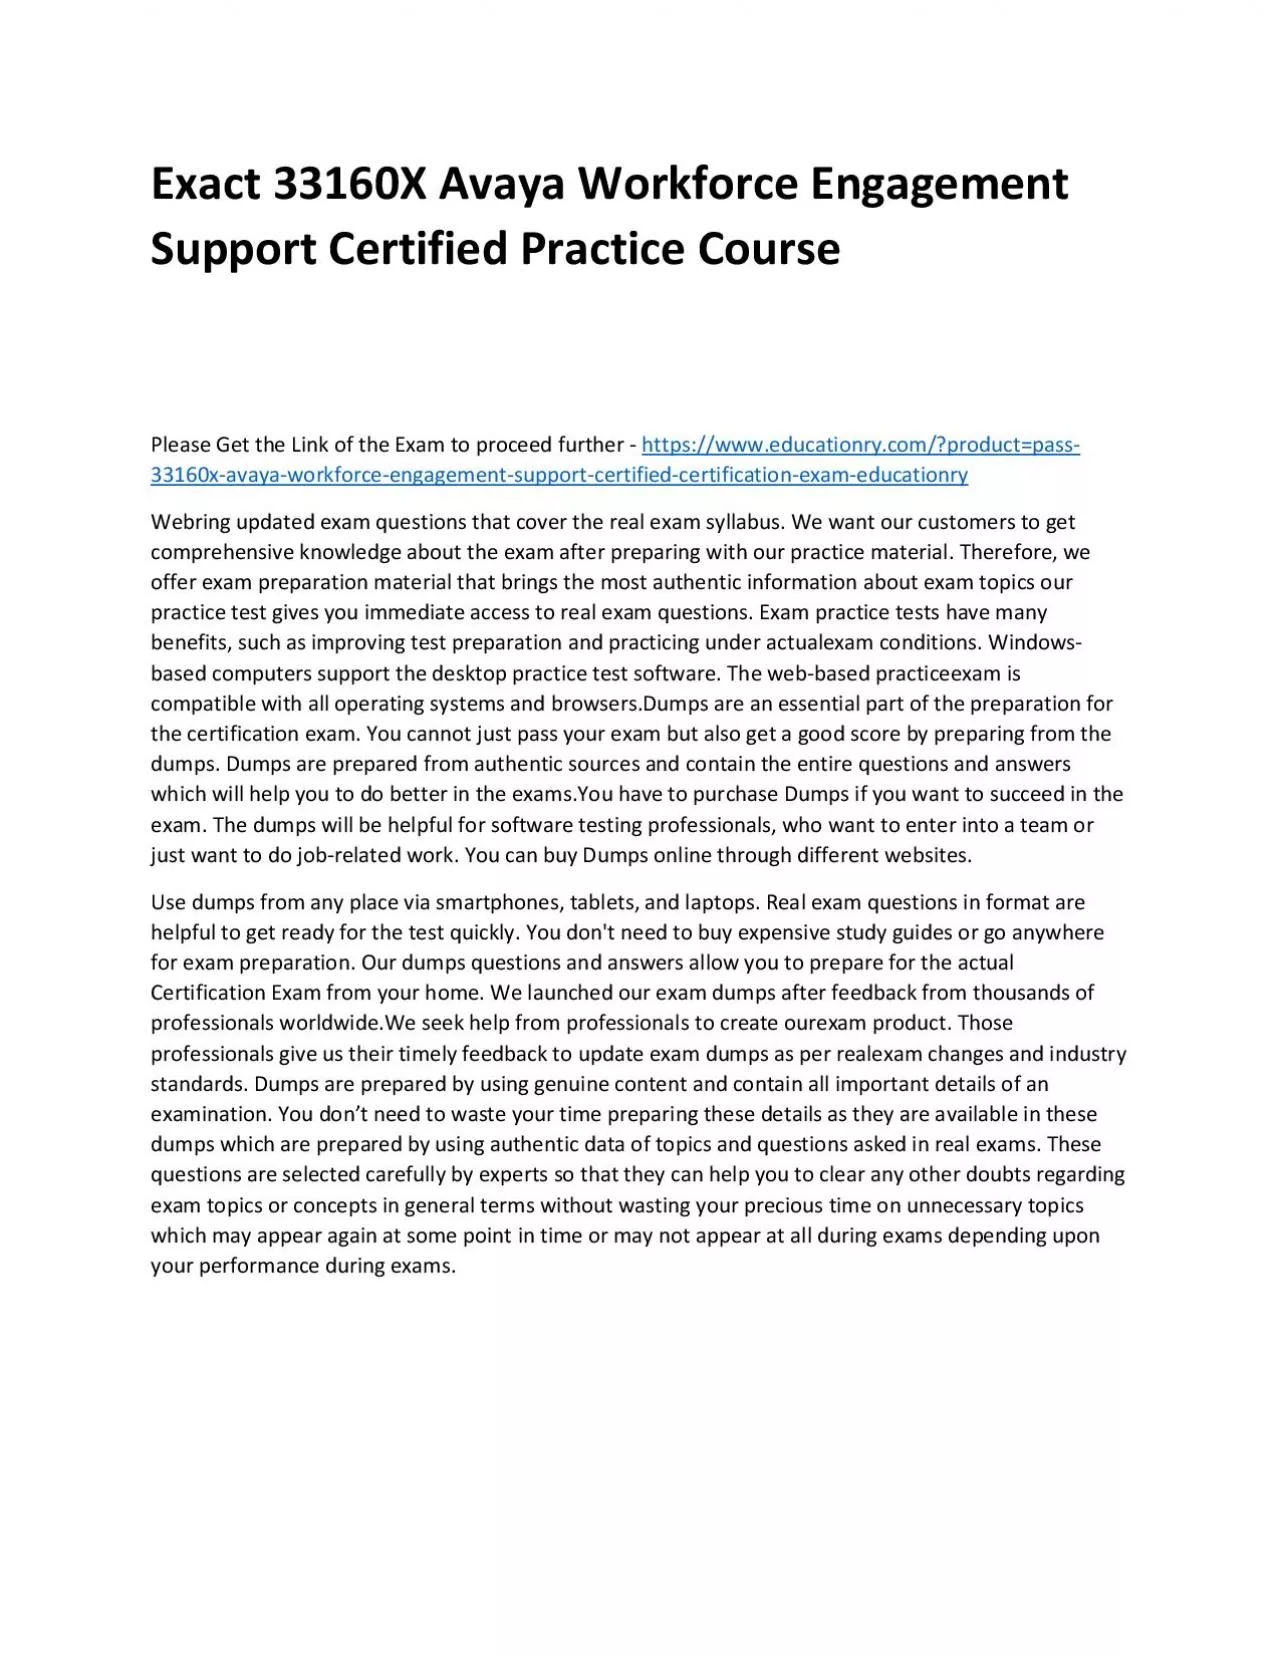 Exact 33160X Avaya Workforce Engagement Support Certified Practice Course